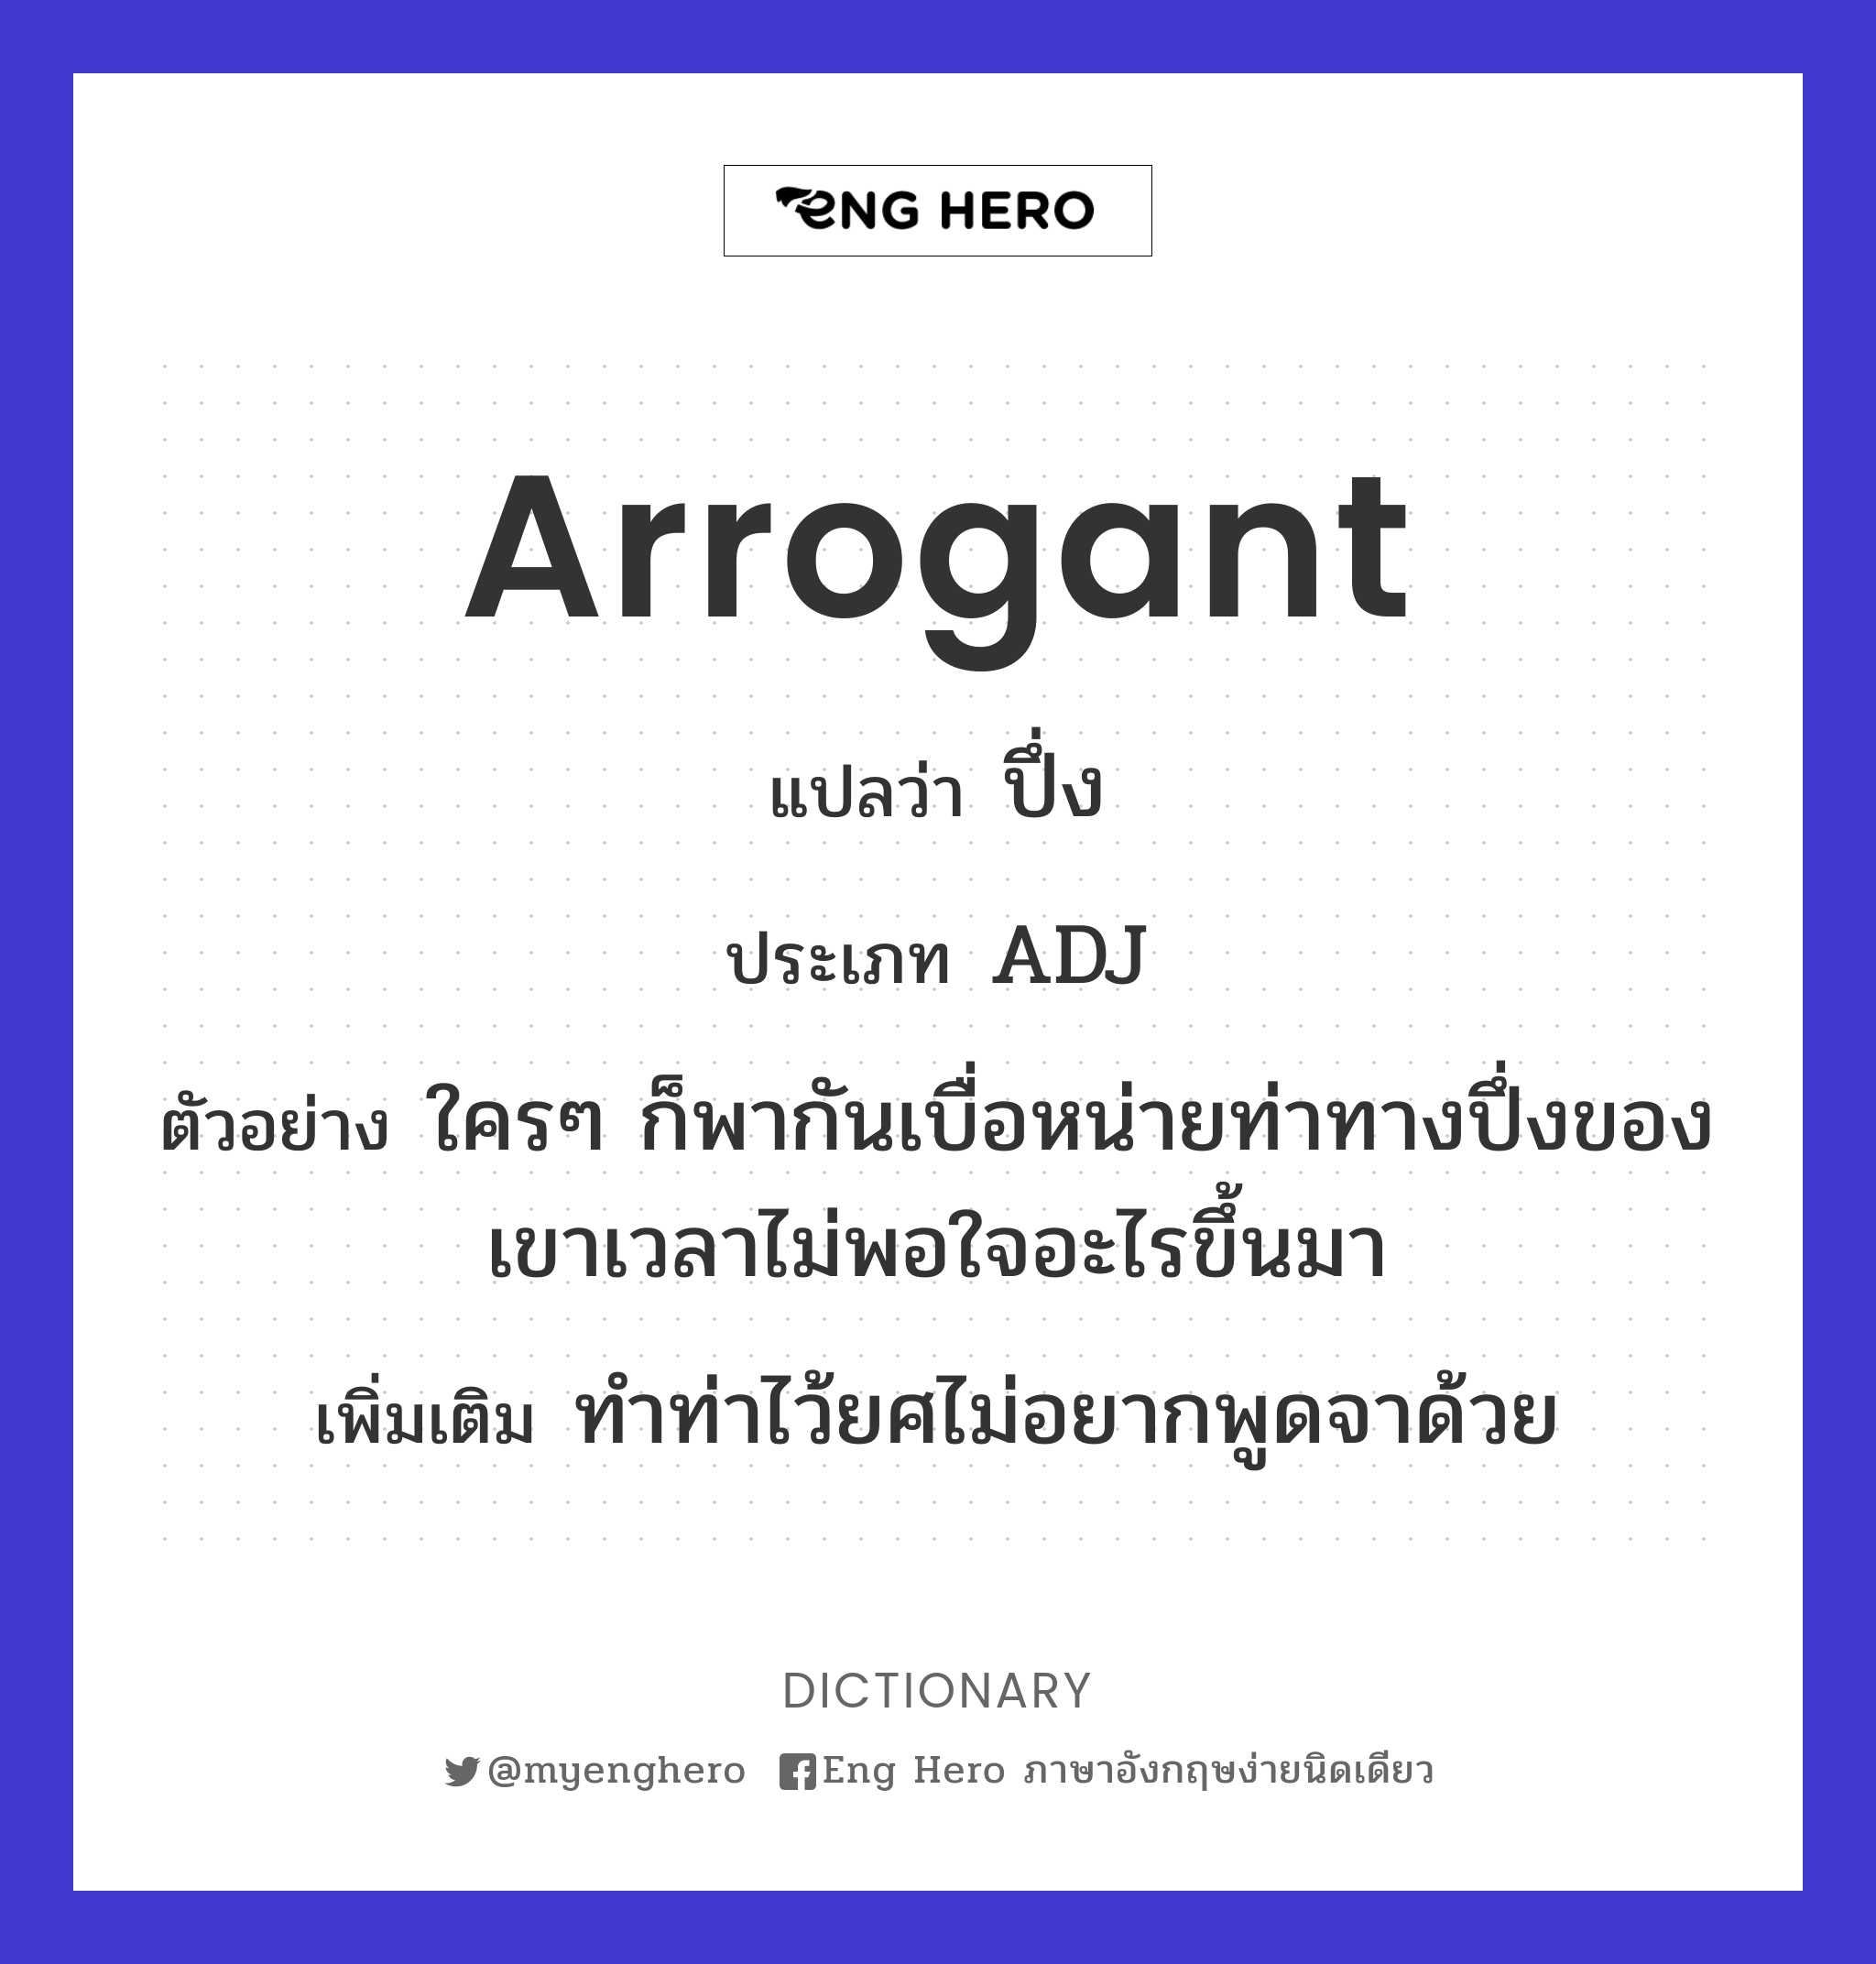 arrogant